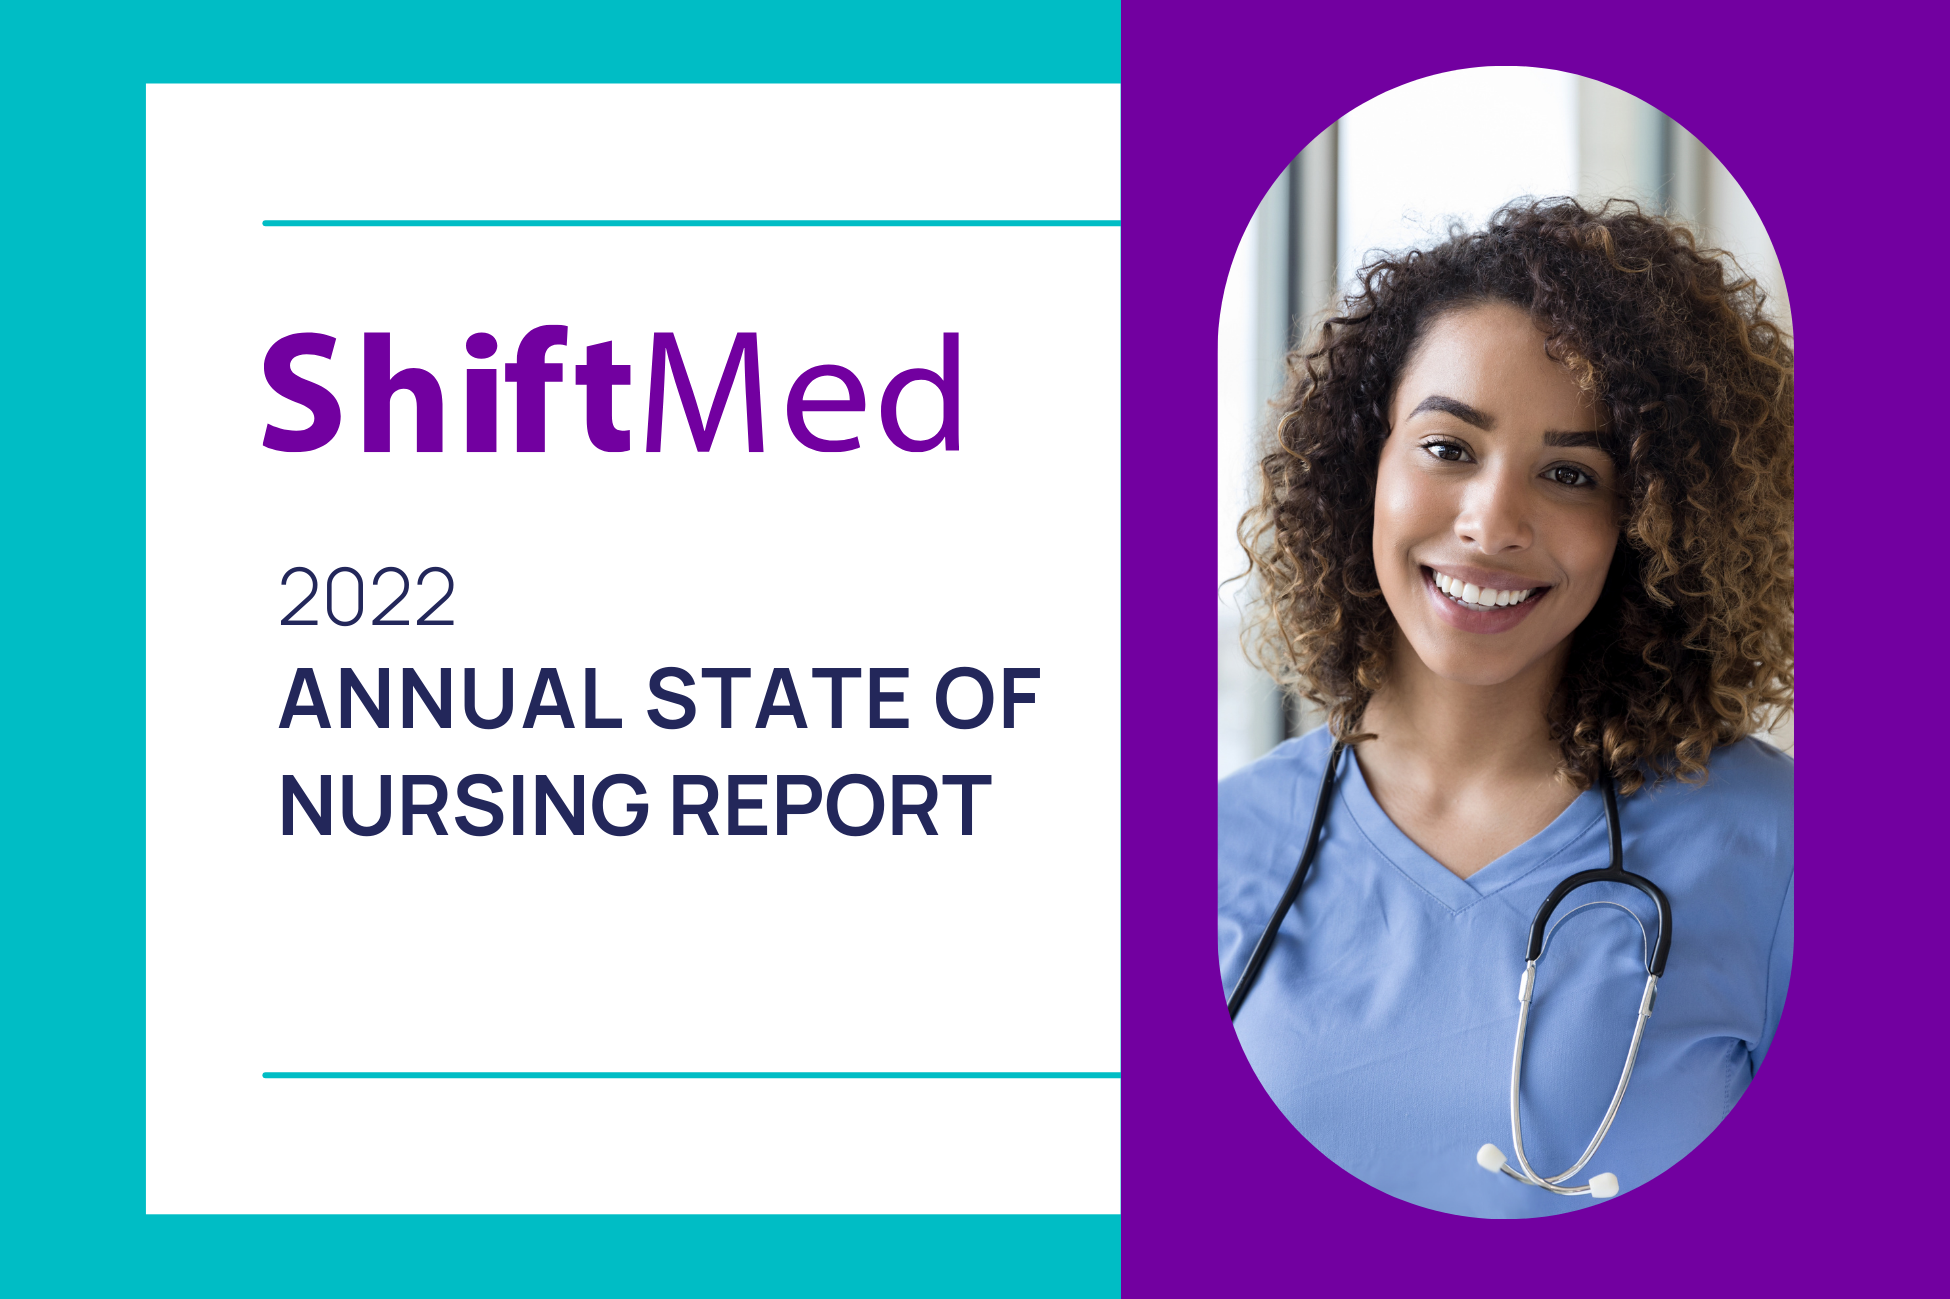 2022 Nursing Shortage: ShiftMed Survey Shows Nurses Aren't Okay